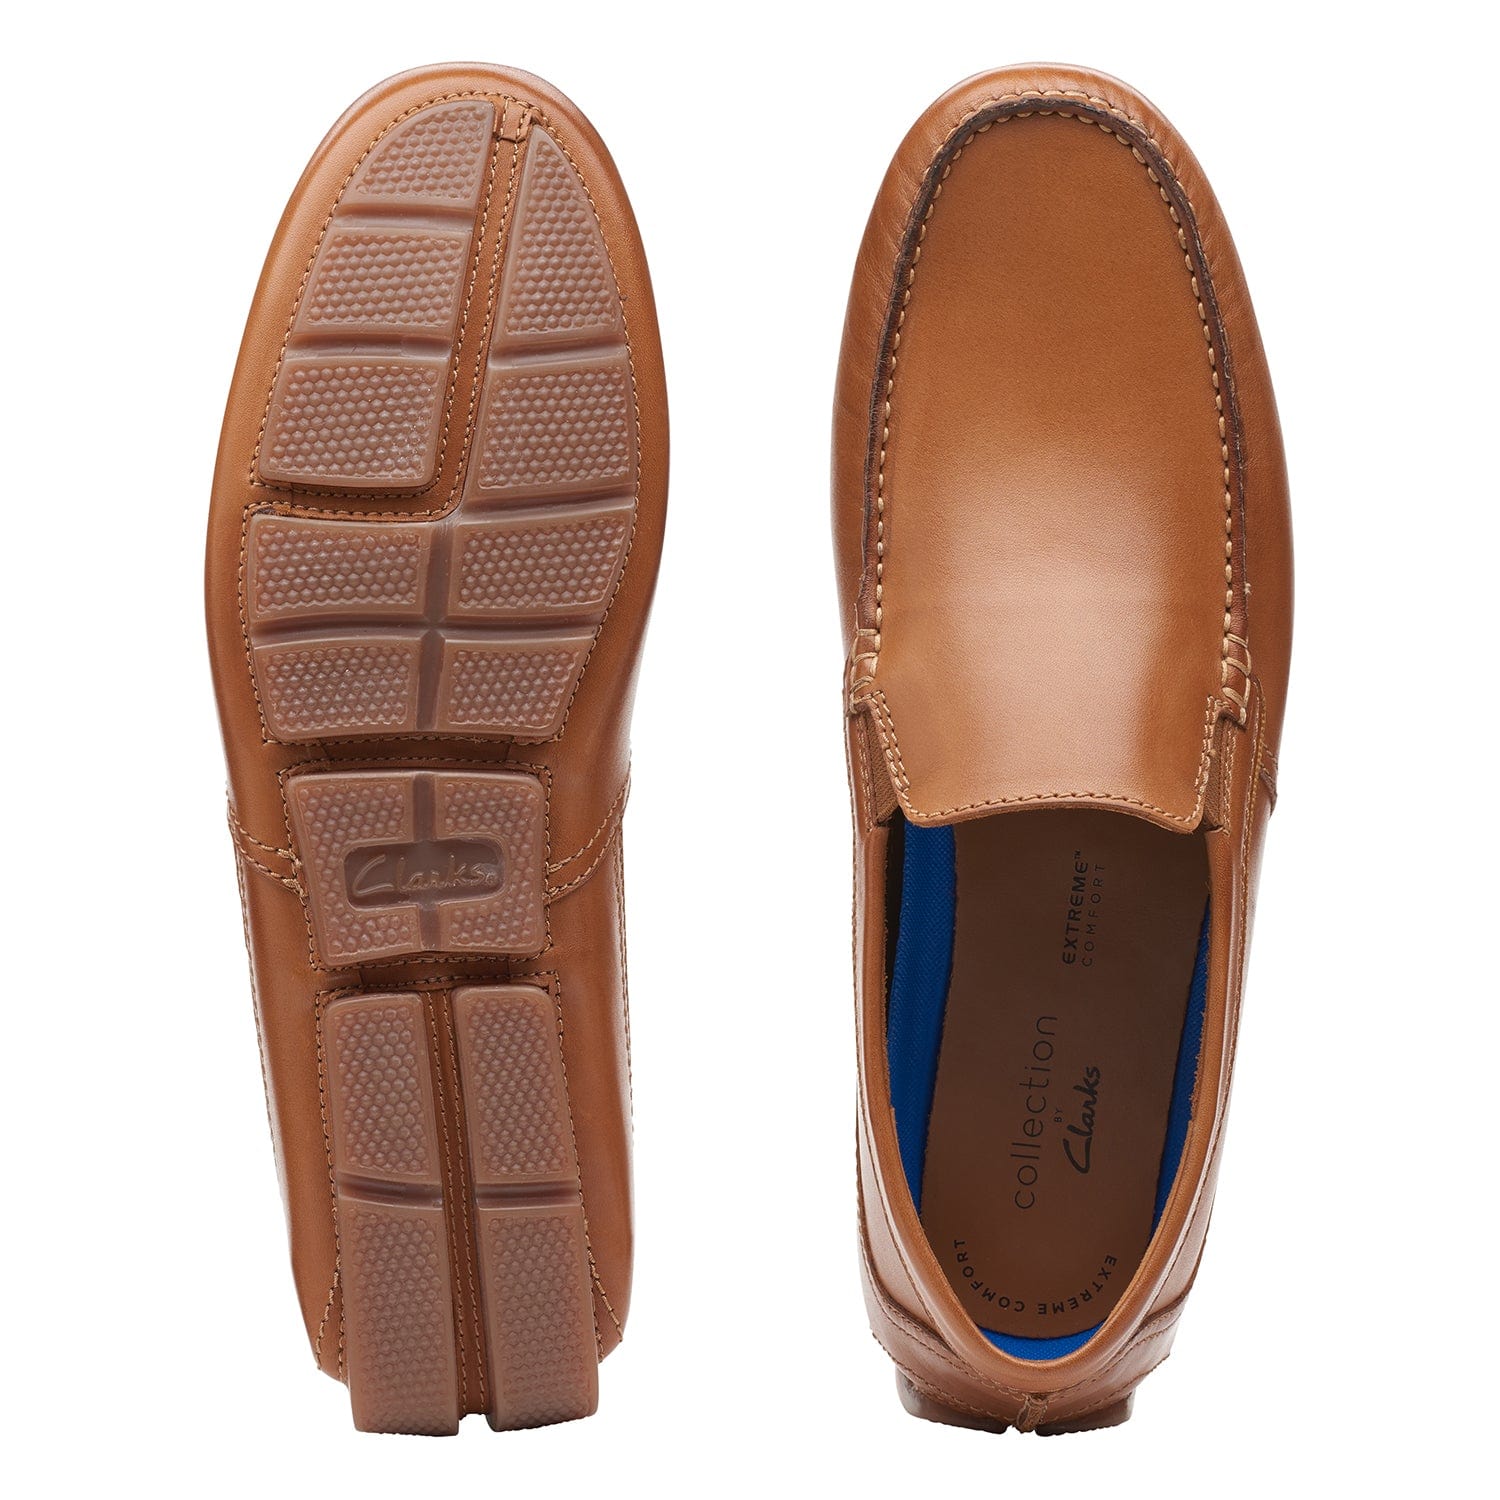 Clarks Markman Plain - Shoes - Tan Leather - 261635447 - G Width (Standard Fit)